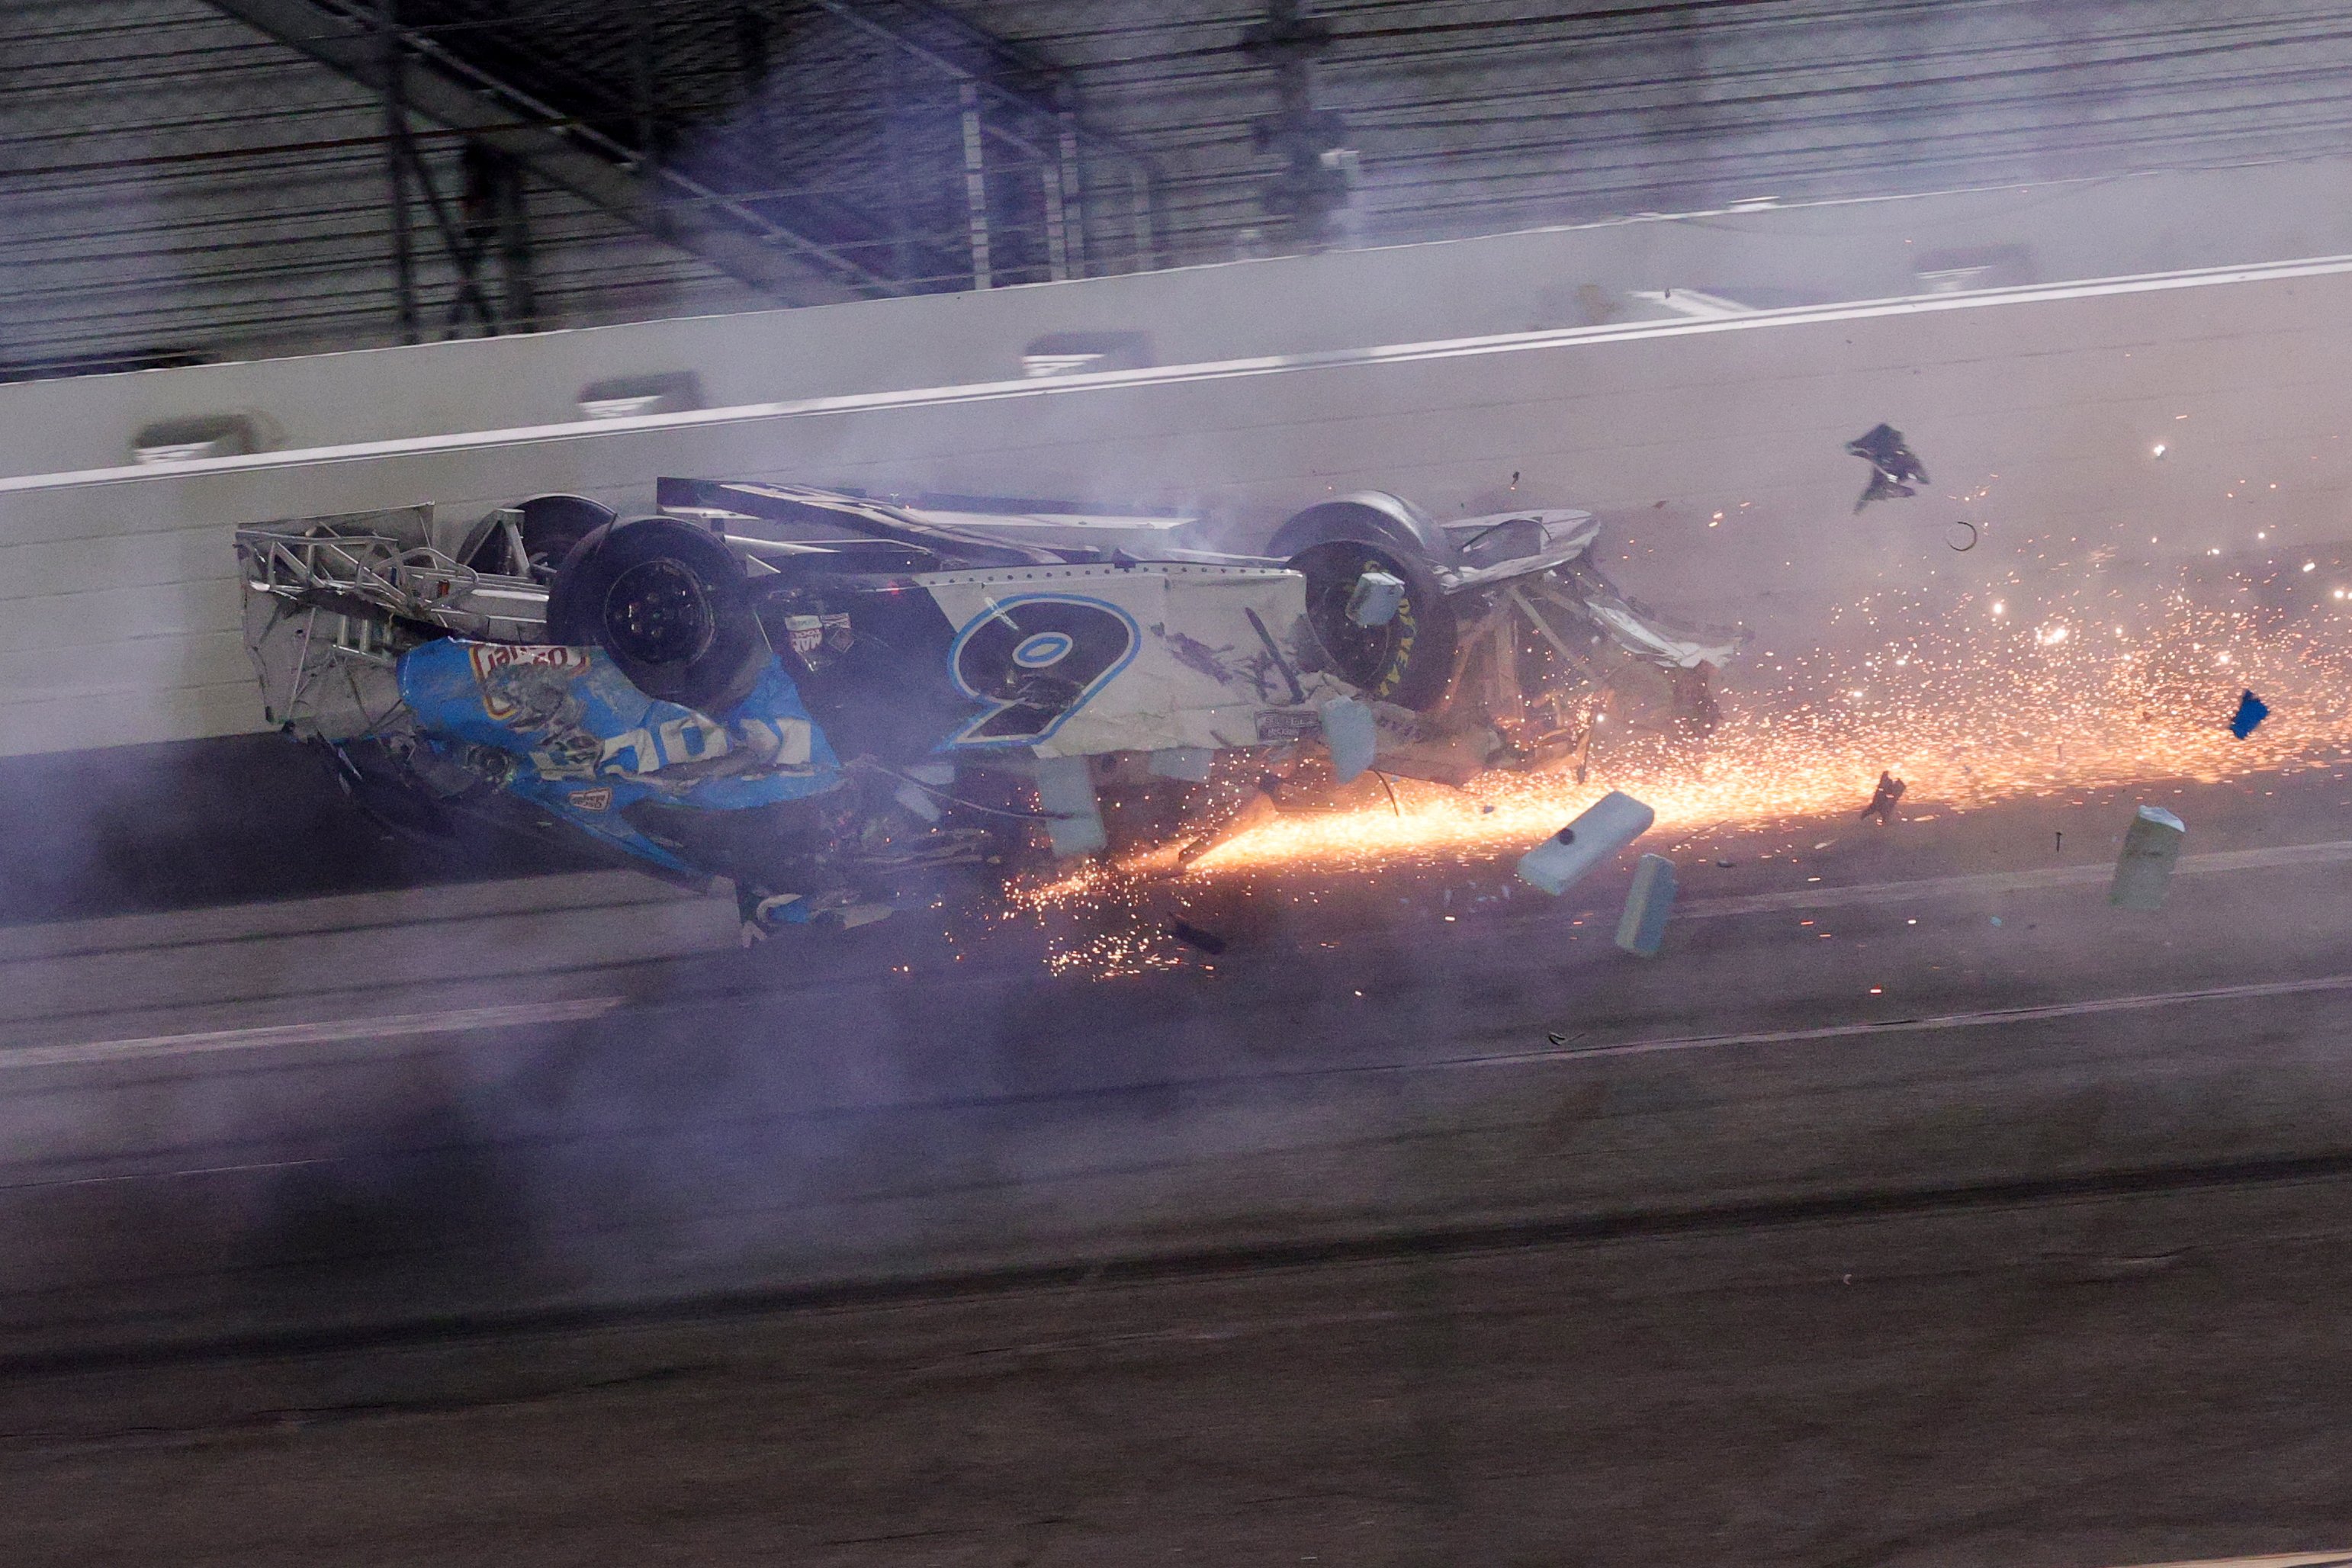 Nascar Driver Ryan Newman Was Hospitalized After Fiery Daytona 500 Crash Cnn Video